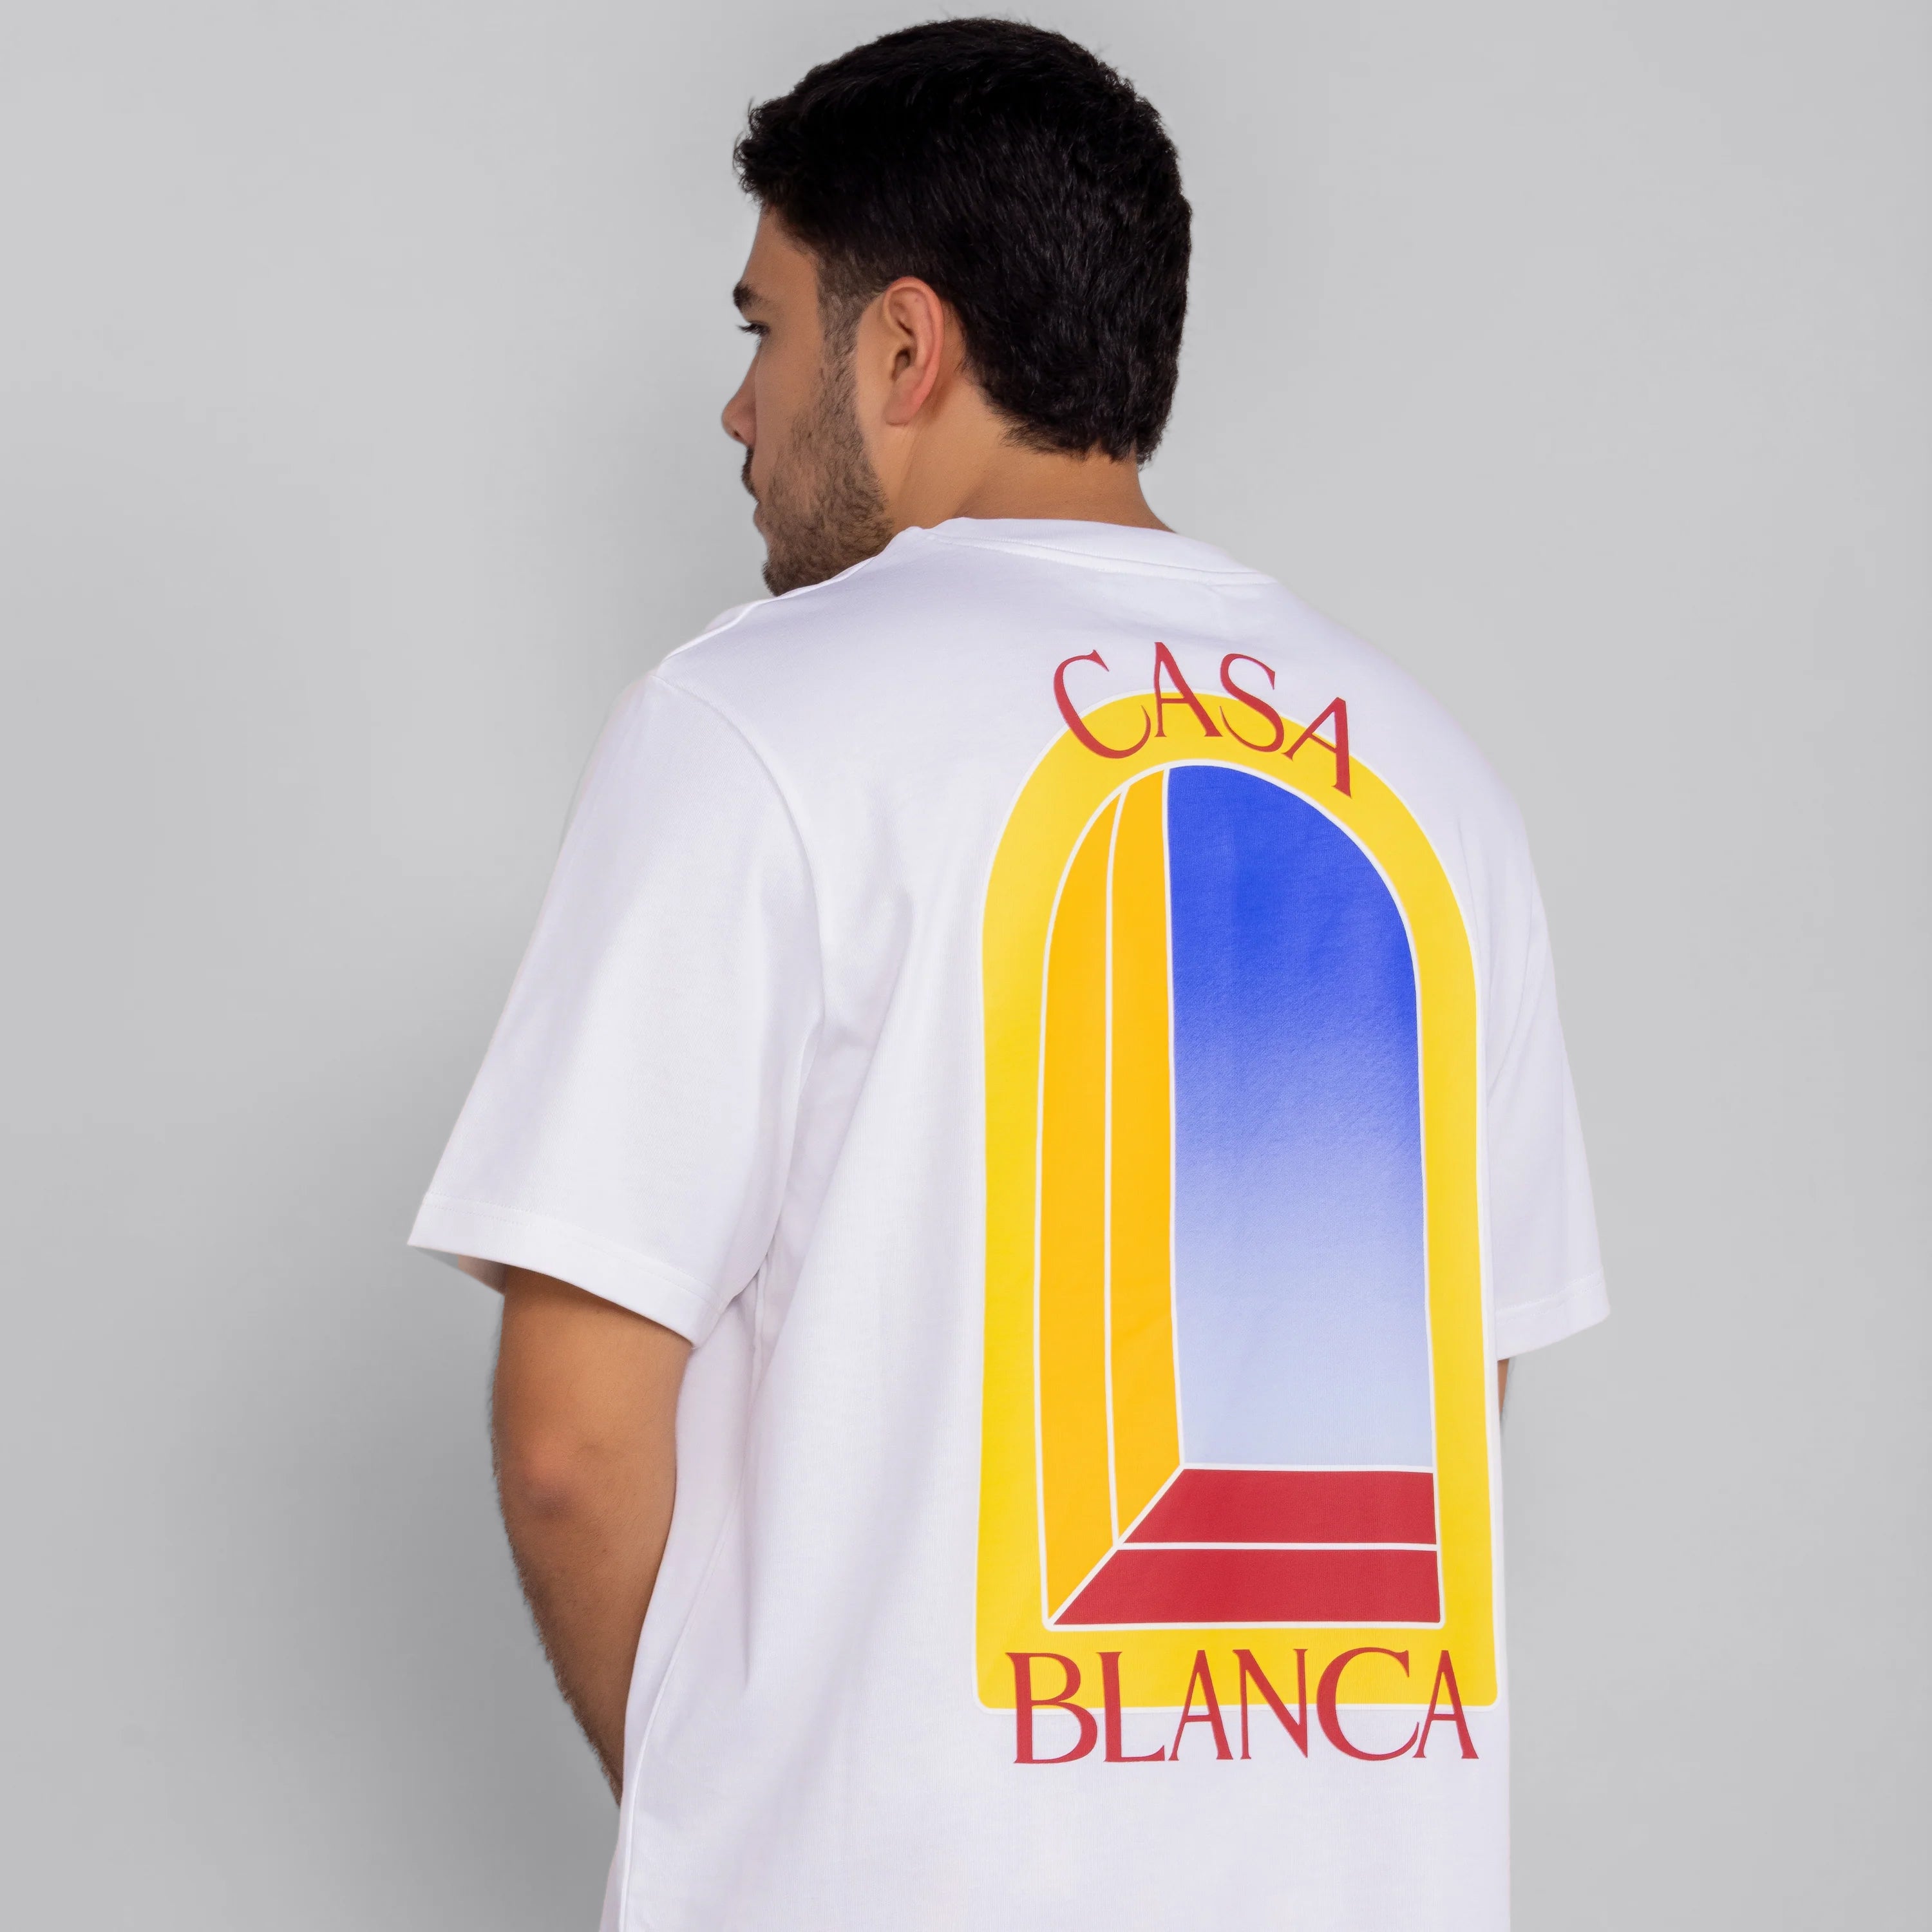 Camiseta Blanca Casablanca L'Arche De Jour Printed